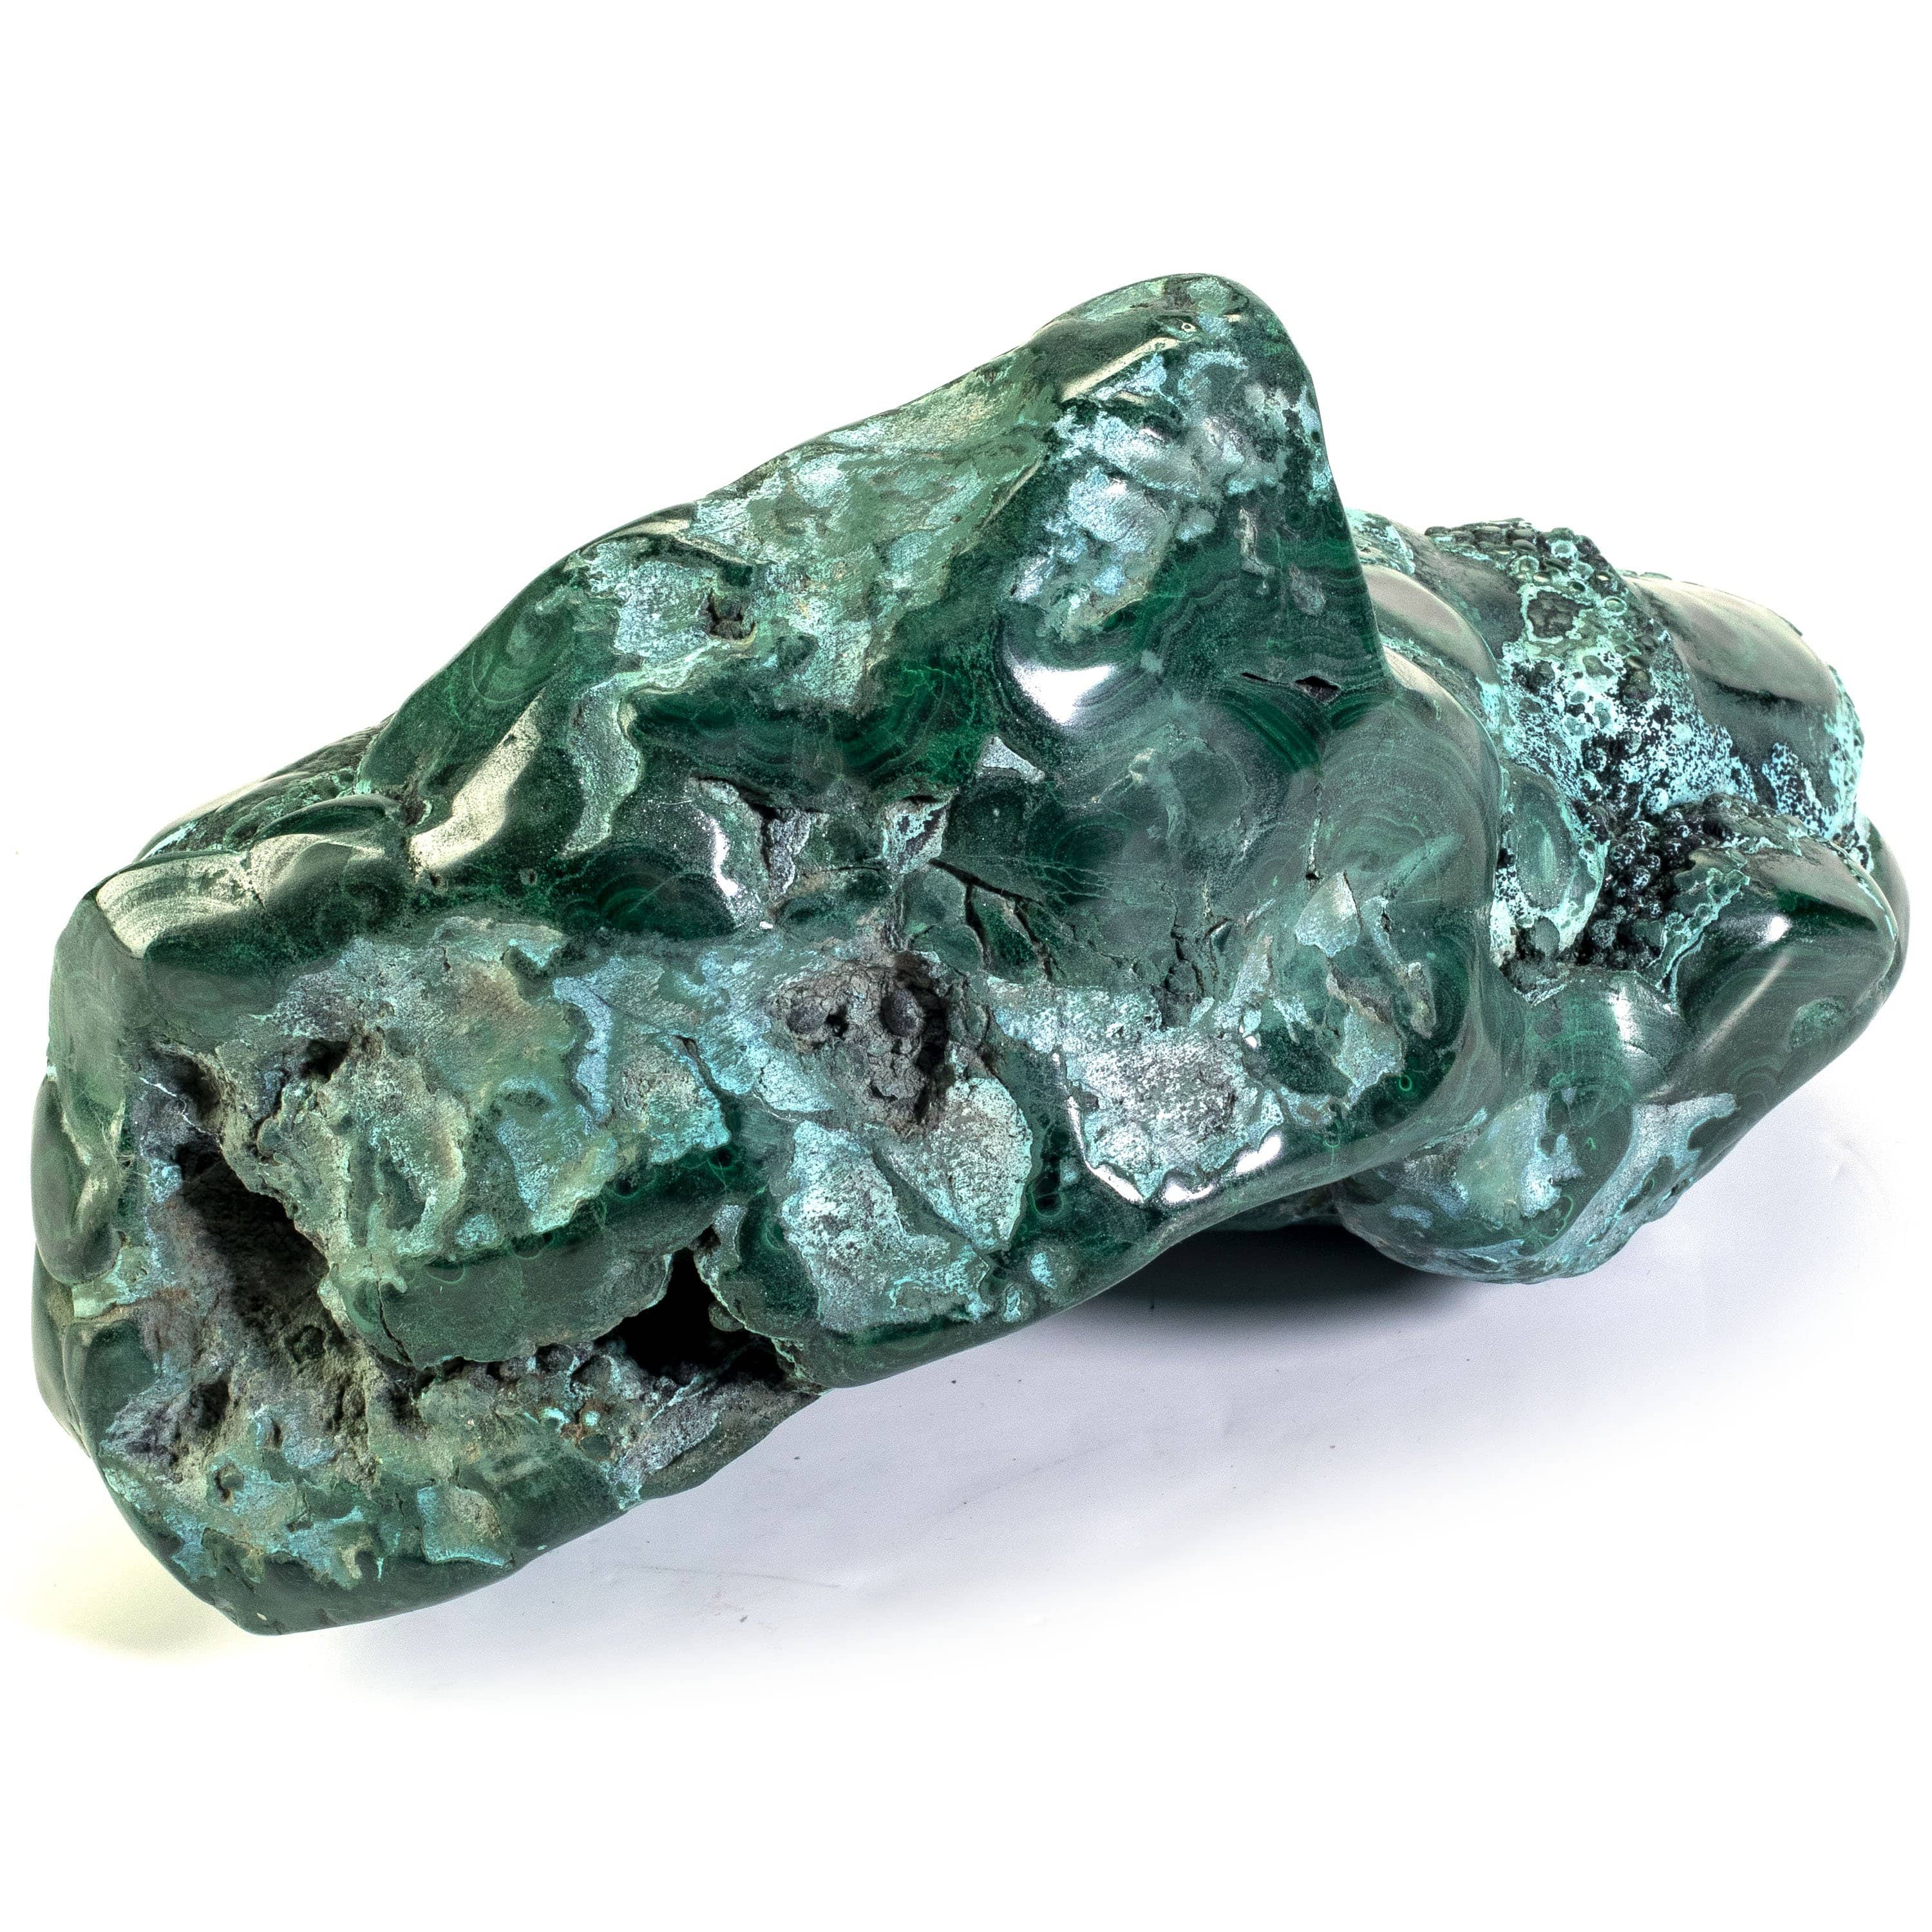 Kalifano Malachite Rare Natural Green Malachite with Blue Chrysocolla Freeform Specimen from Congo - 3.5 kg / 7.6 lbs MAC3200.001